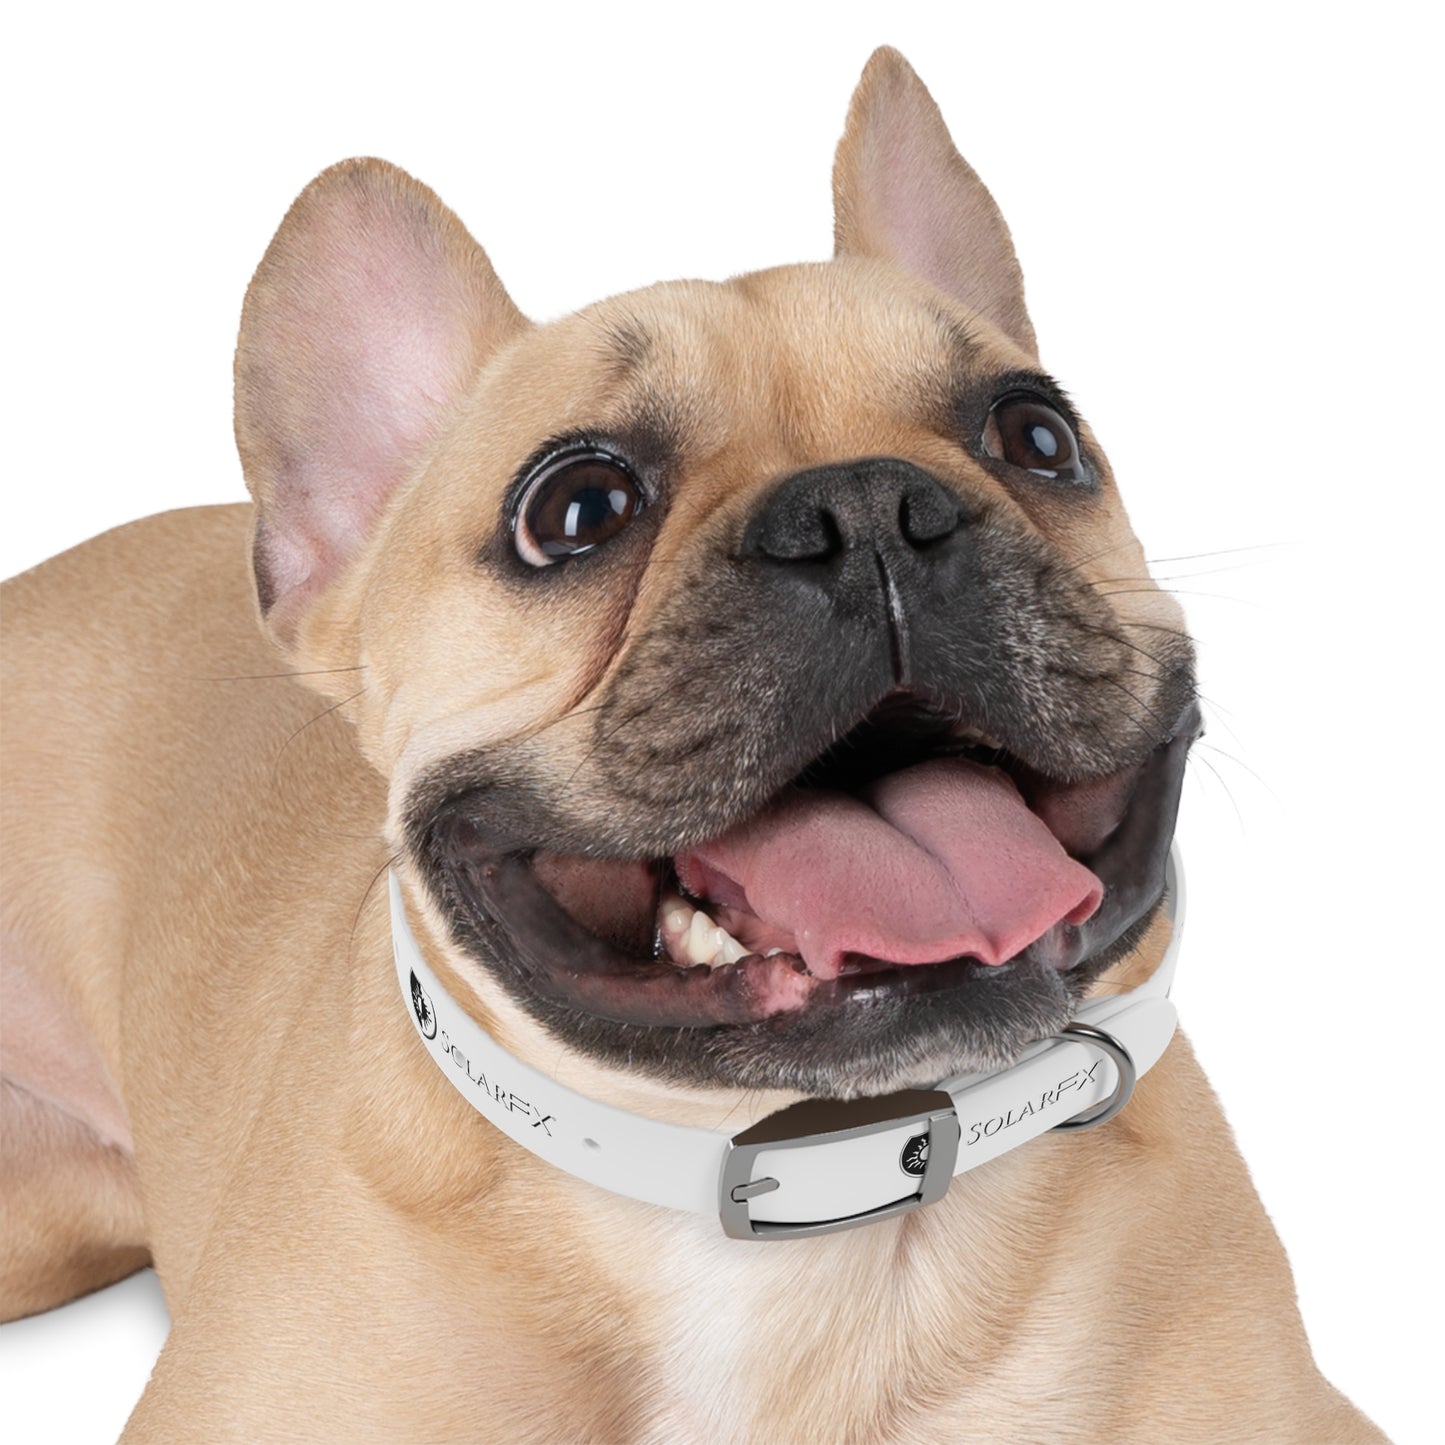 SolarFX  Dog Collar